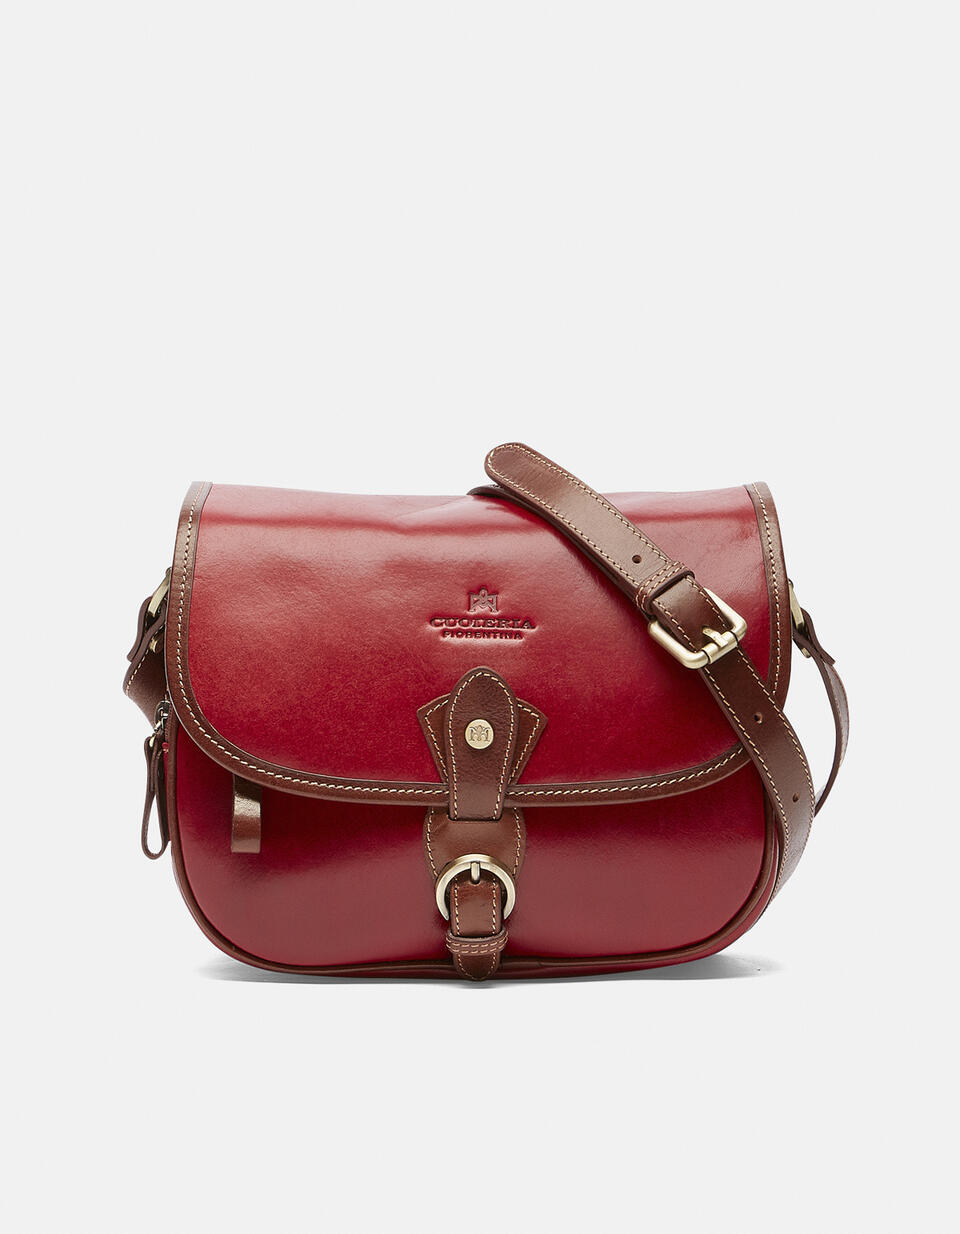 Leather Messenger bag - Messenger Bags - WOMEN'S BAGS | bags  - Messenger Bags - WOMEN'S BAGS | bagsCuoieria Fiorentina